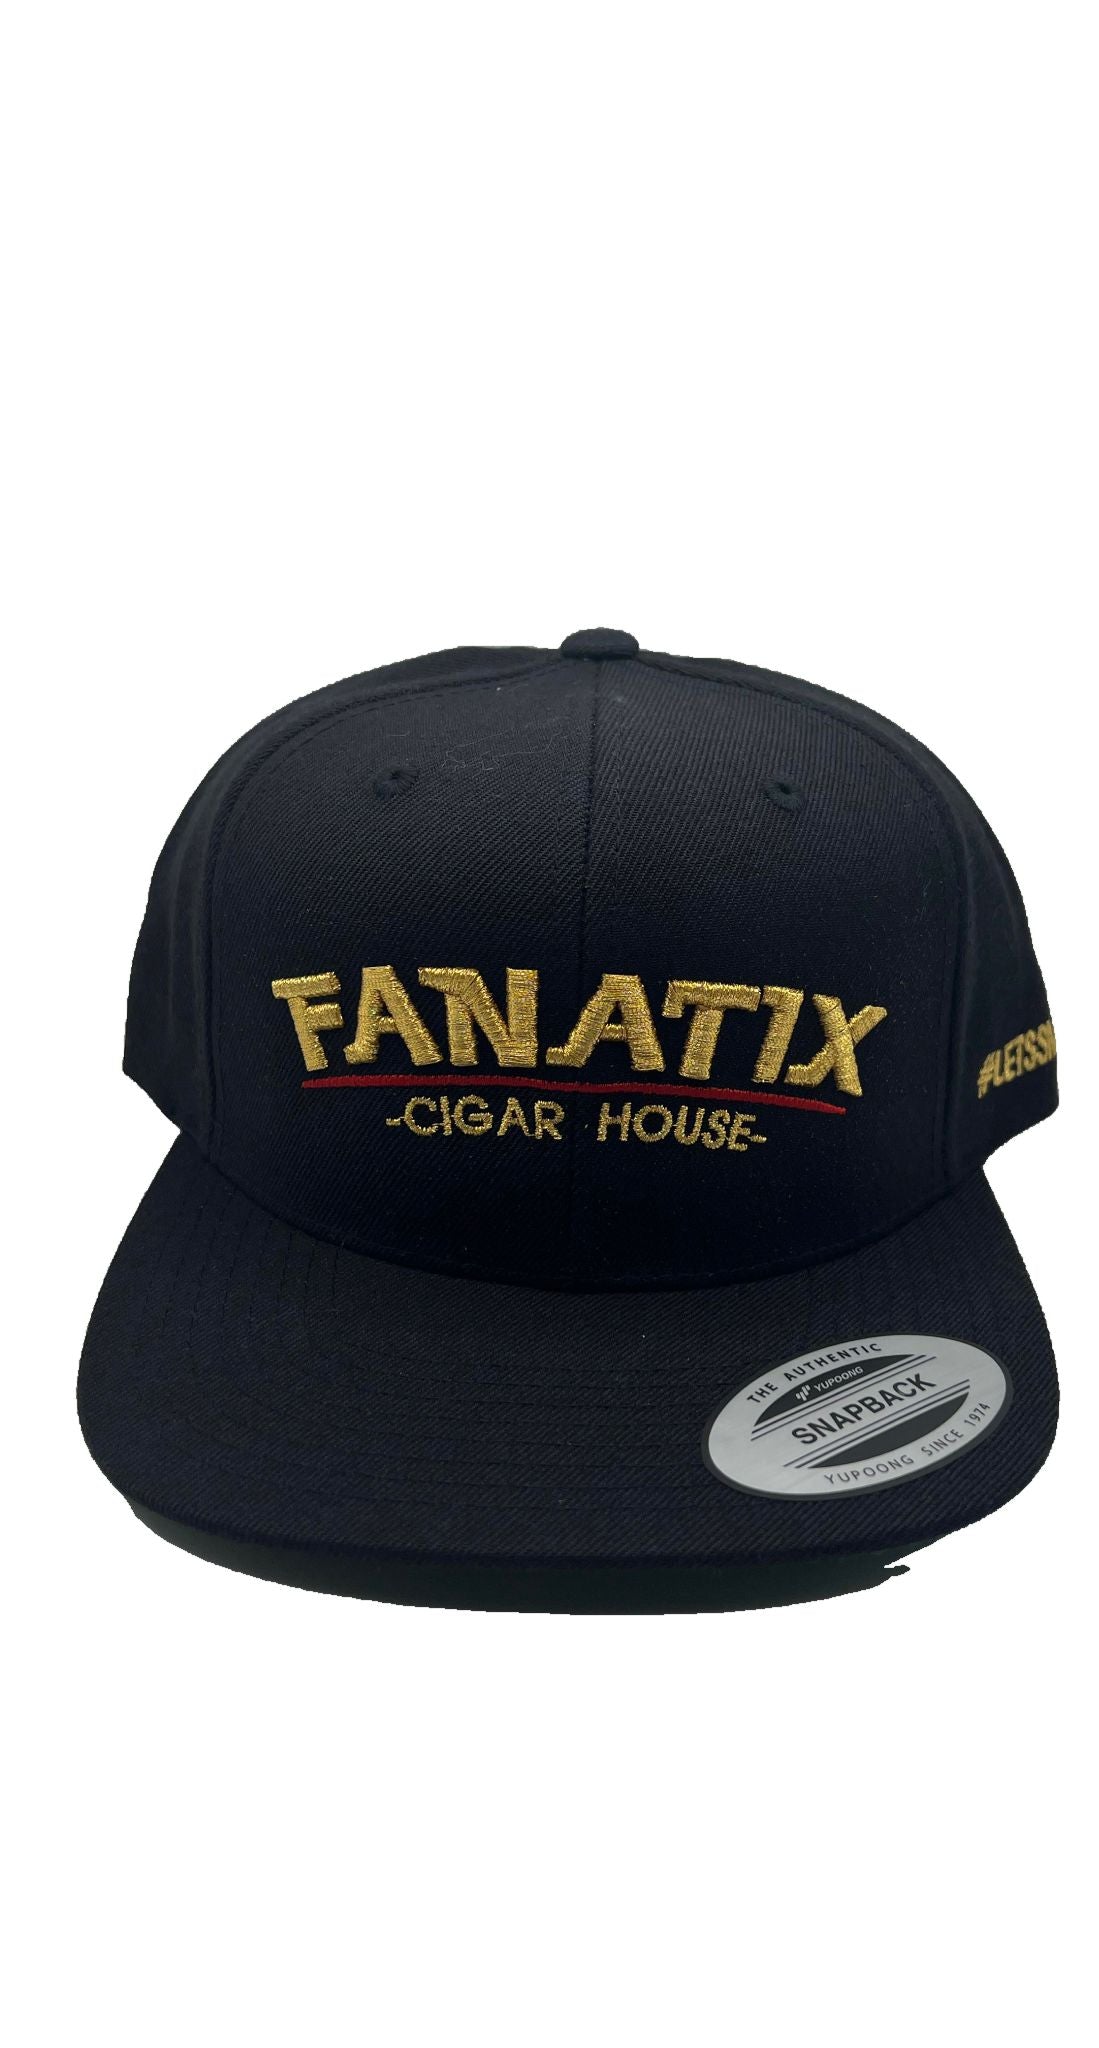 Fanatix Cigar House Hat - Black